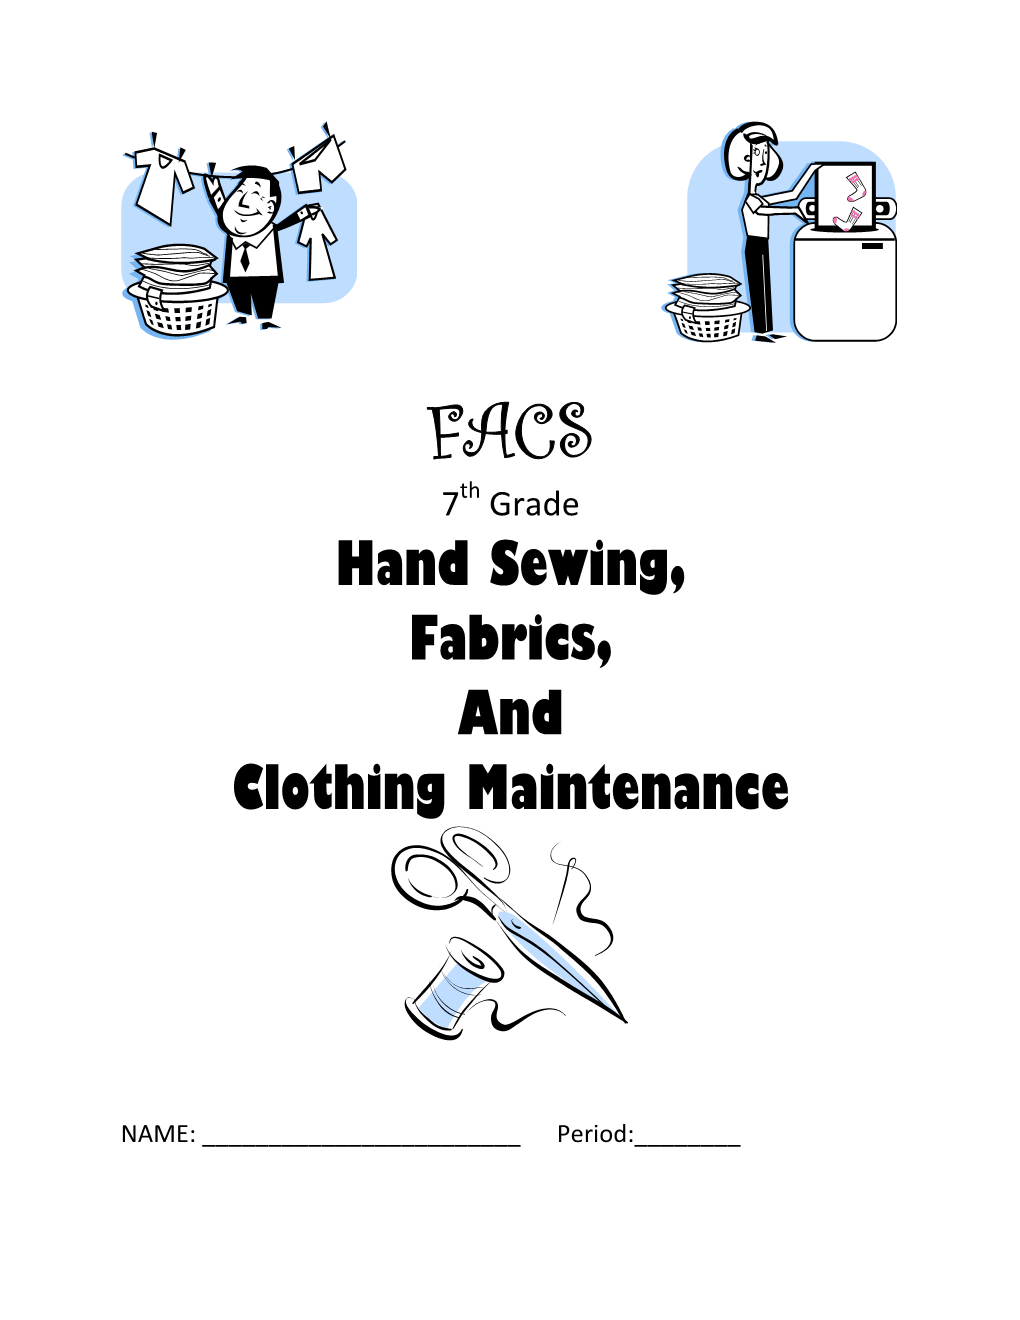 Hand Sewing, Fabrics, and Clothing Maintenance